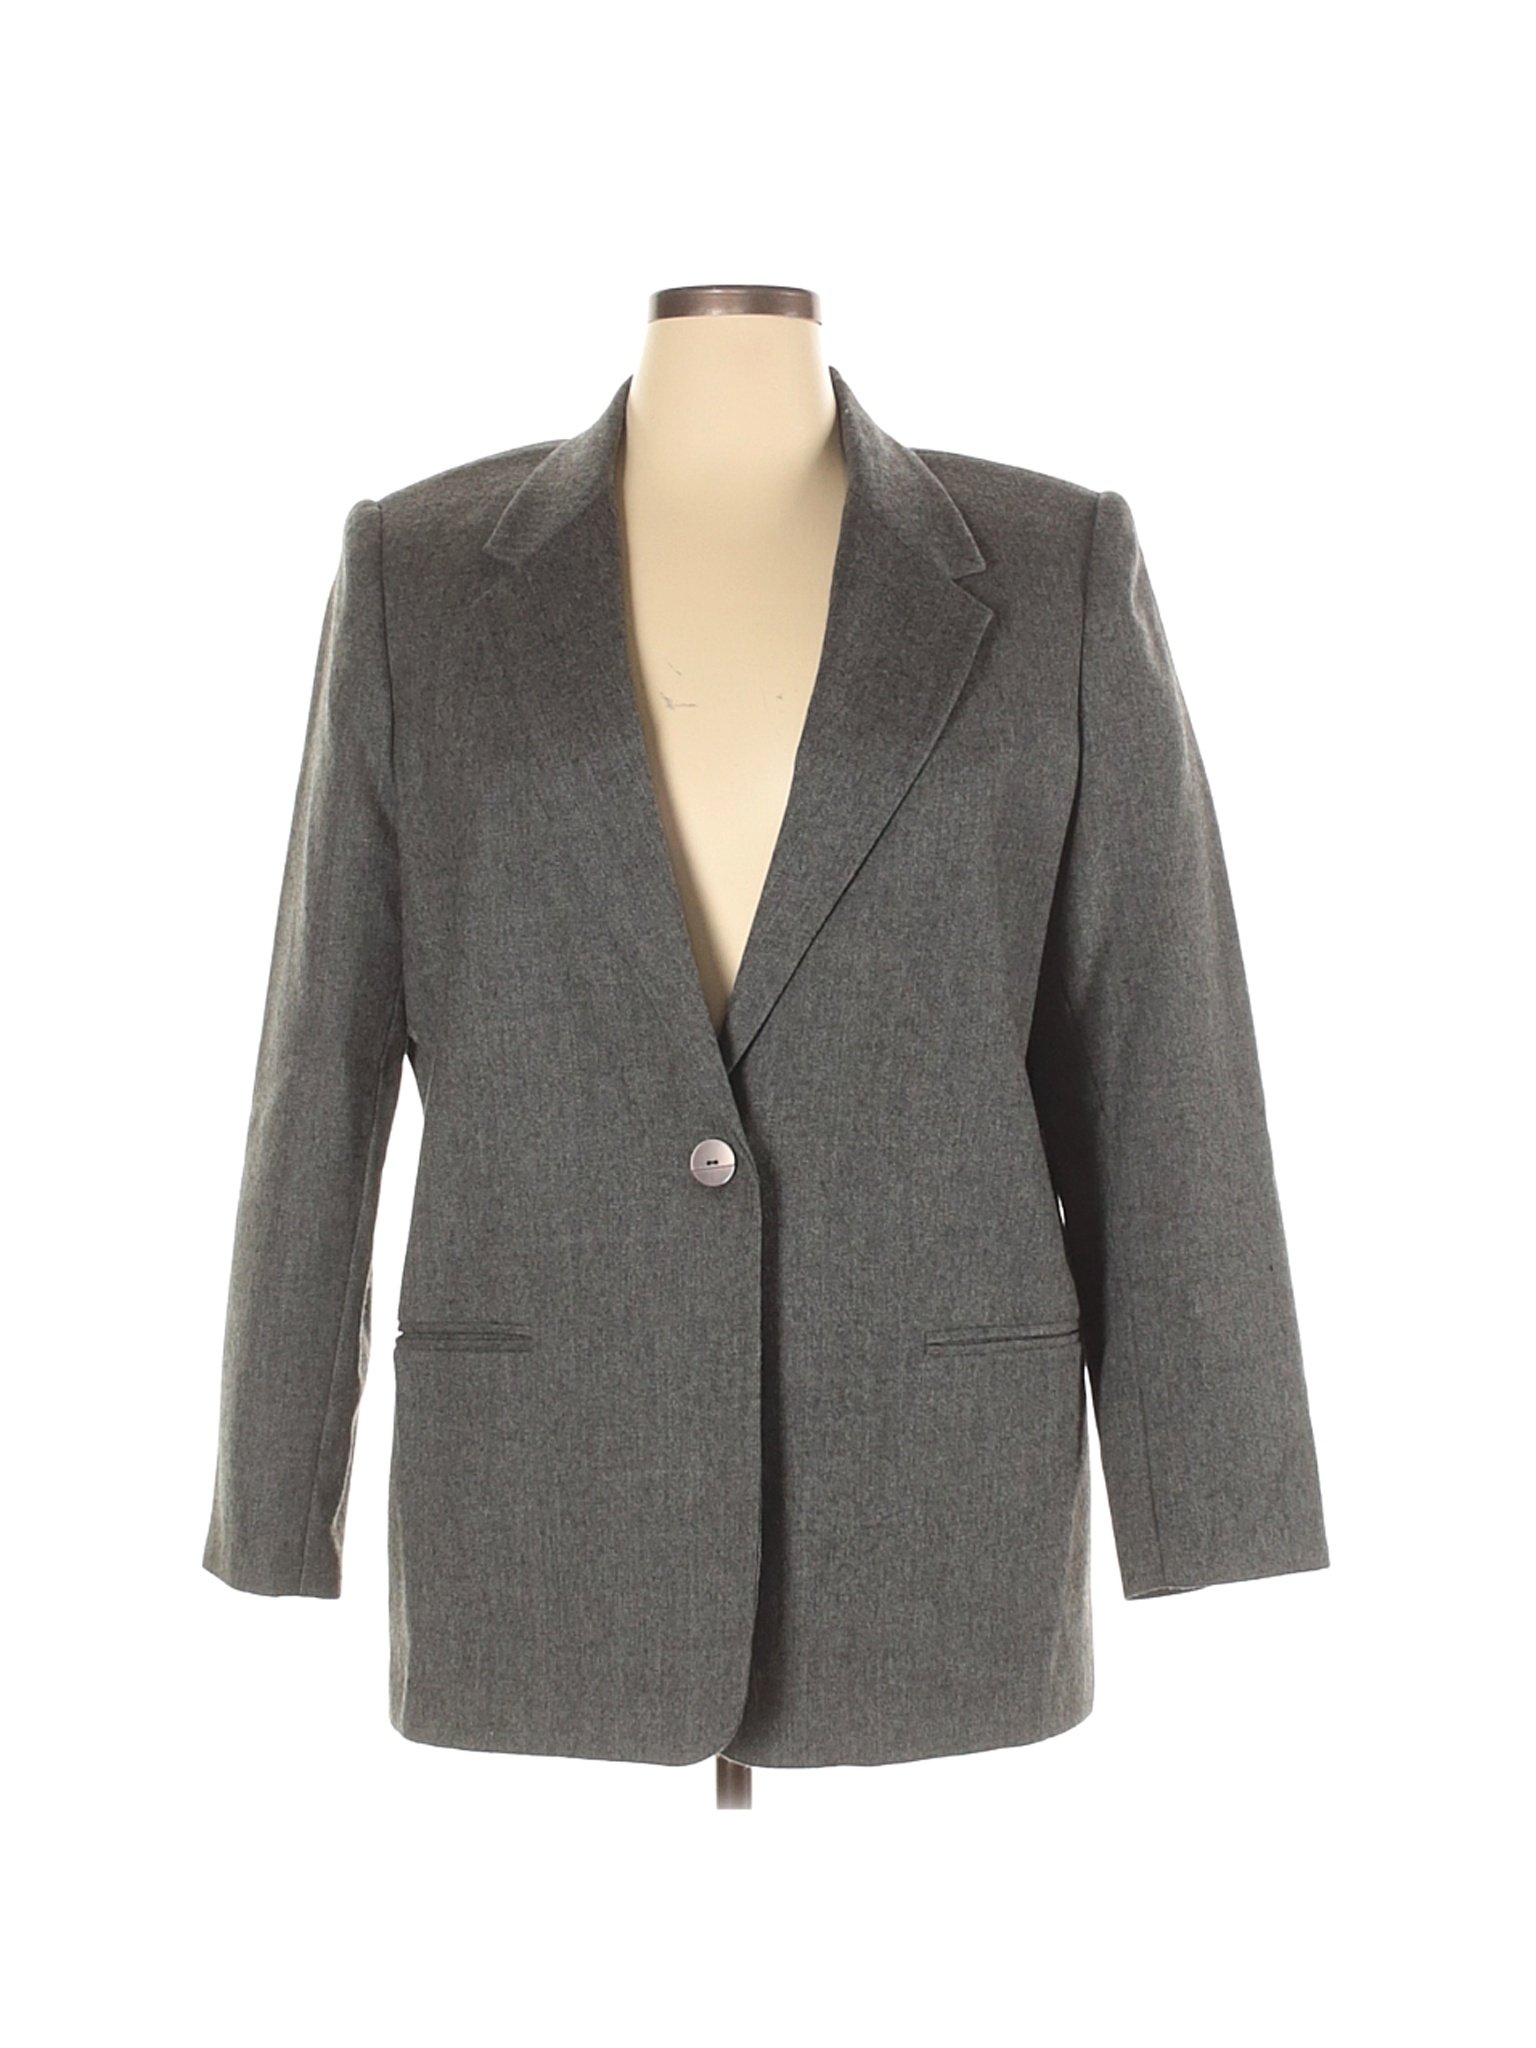 Sag Harbor Women Gray Wool Blazer 16 | eBay